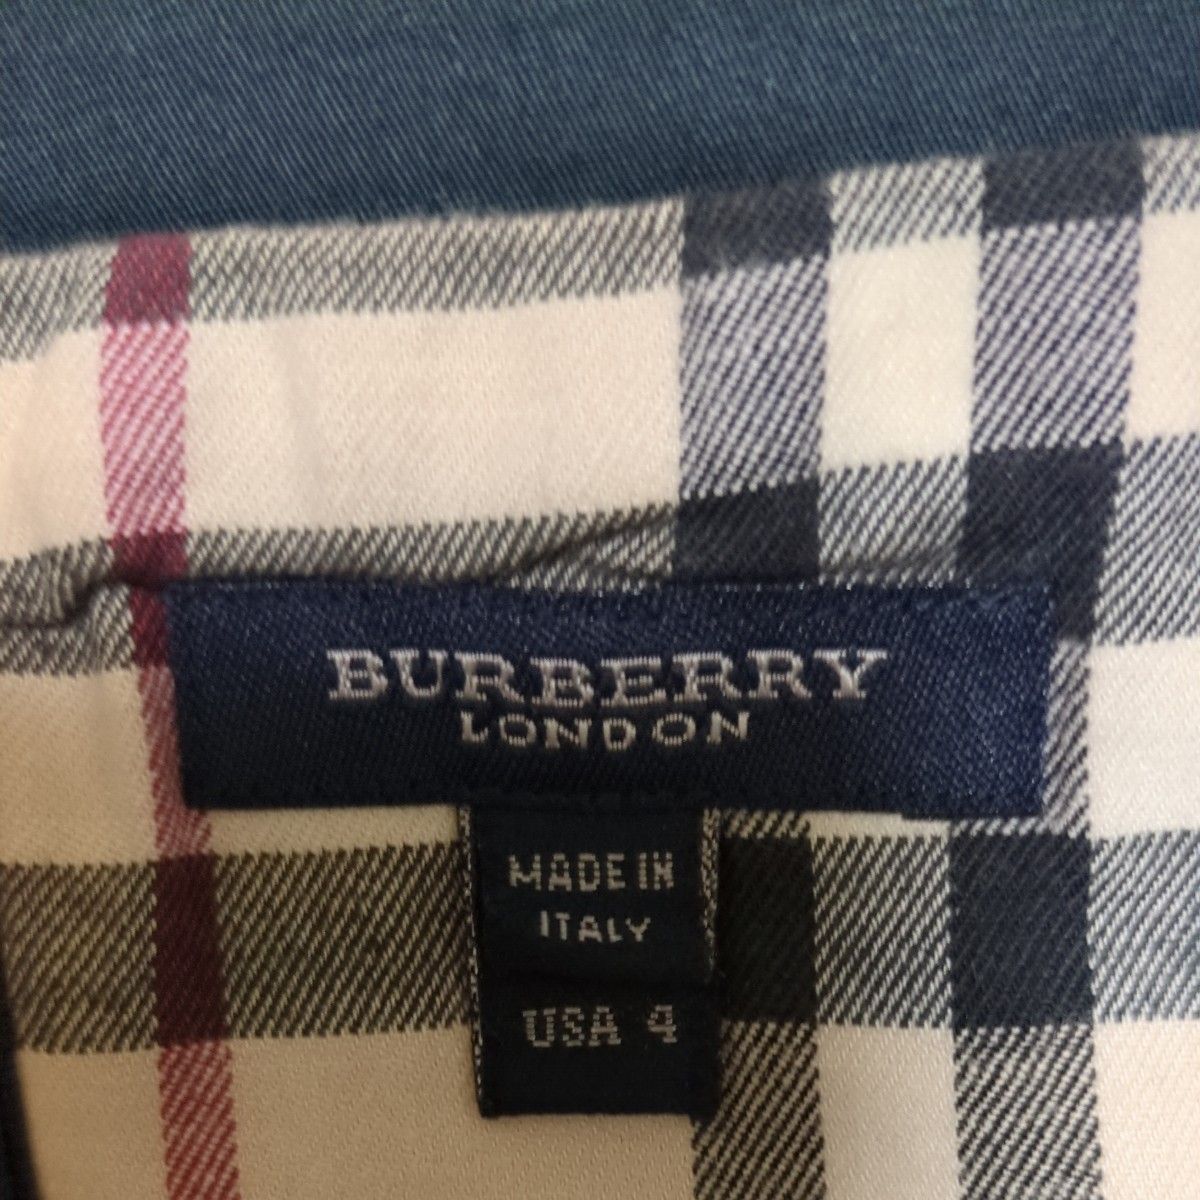 BURBERRY LONDON リバーシブル巻きスカート USA4【24時間以内に発送